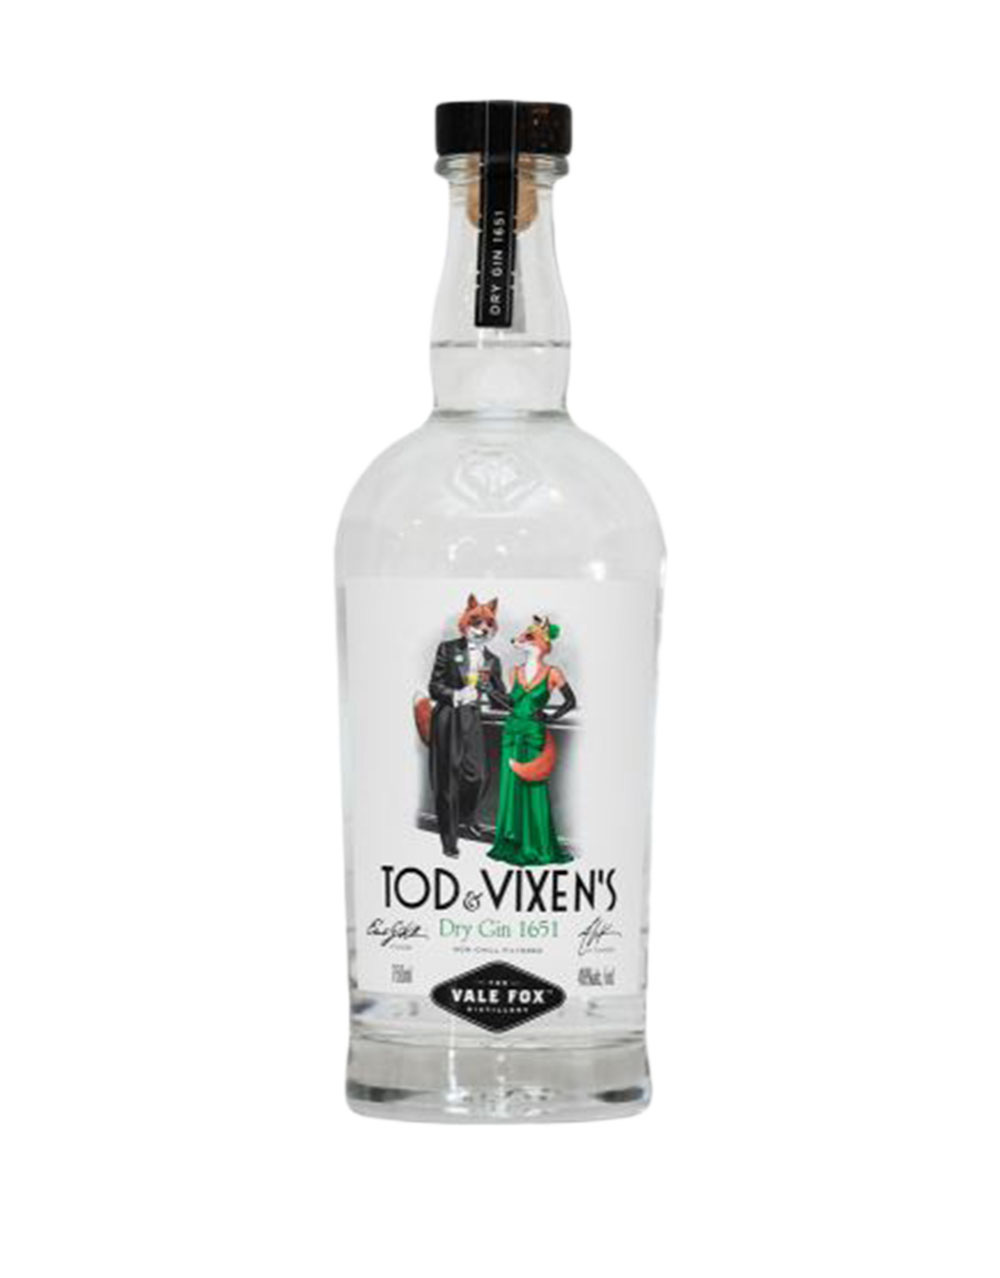 Tod & Vixen's Dry Gin 1651